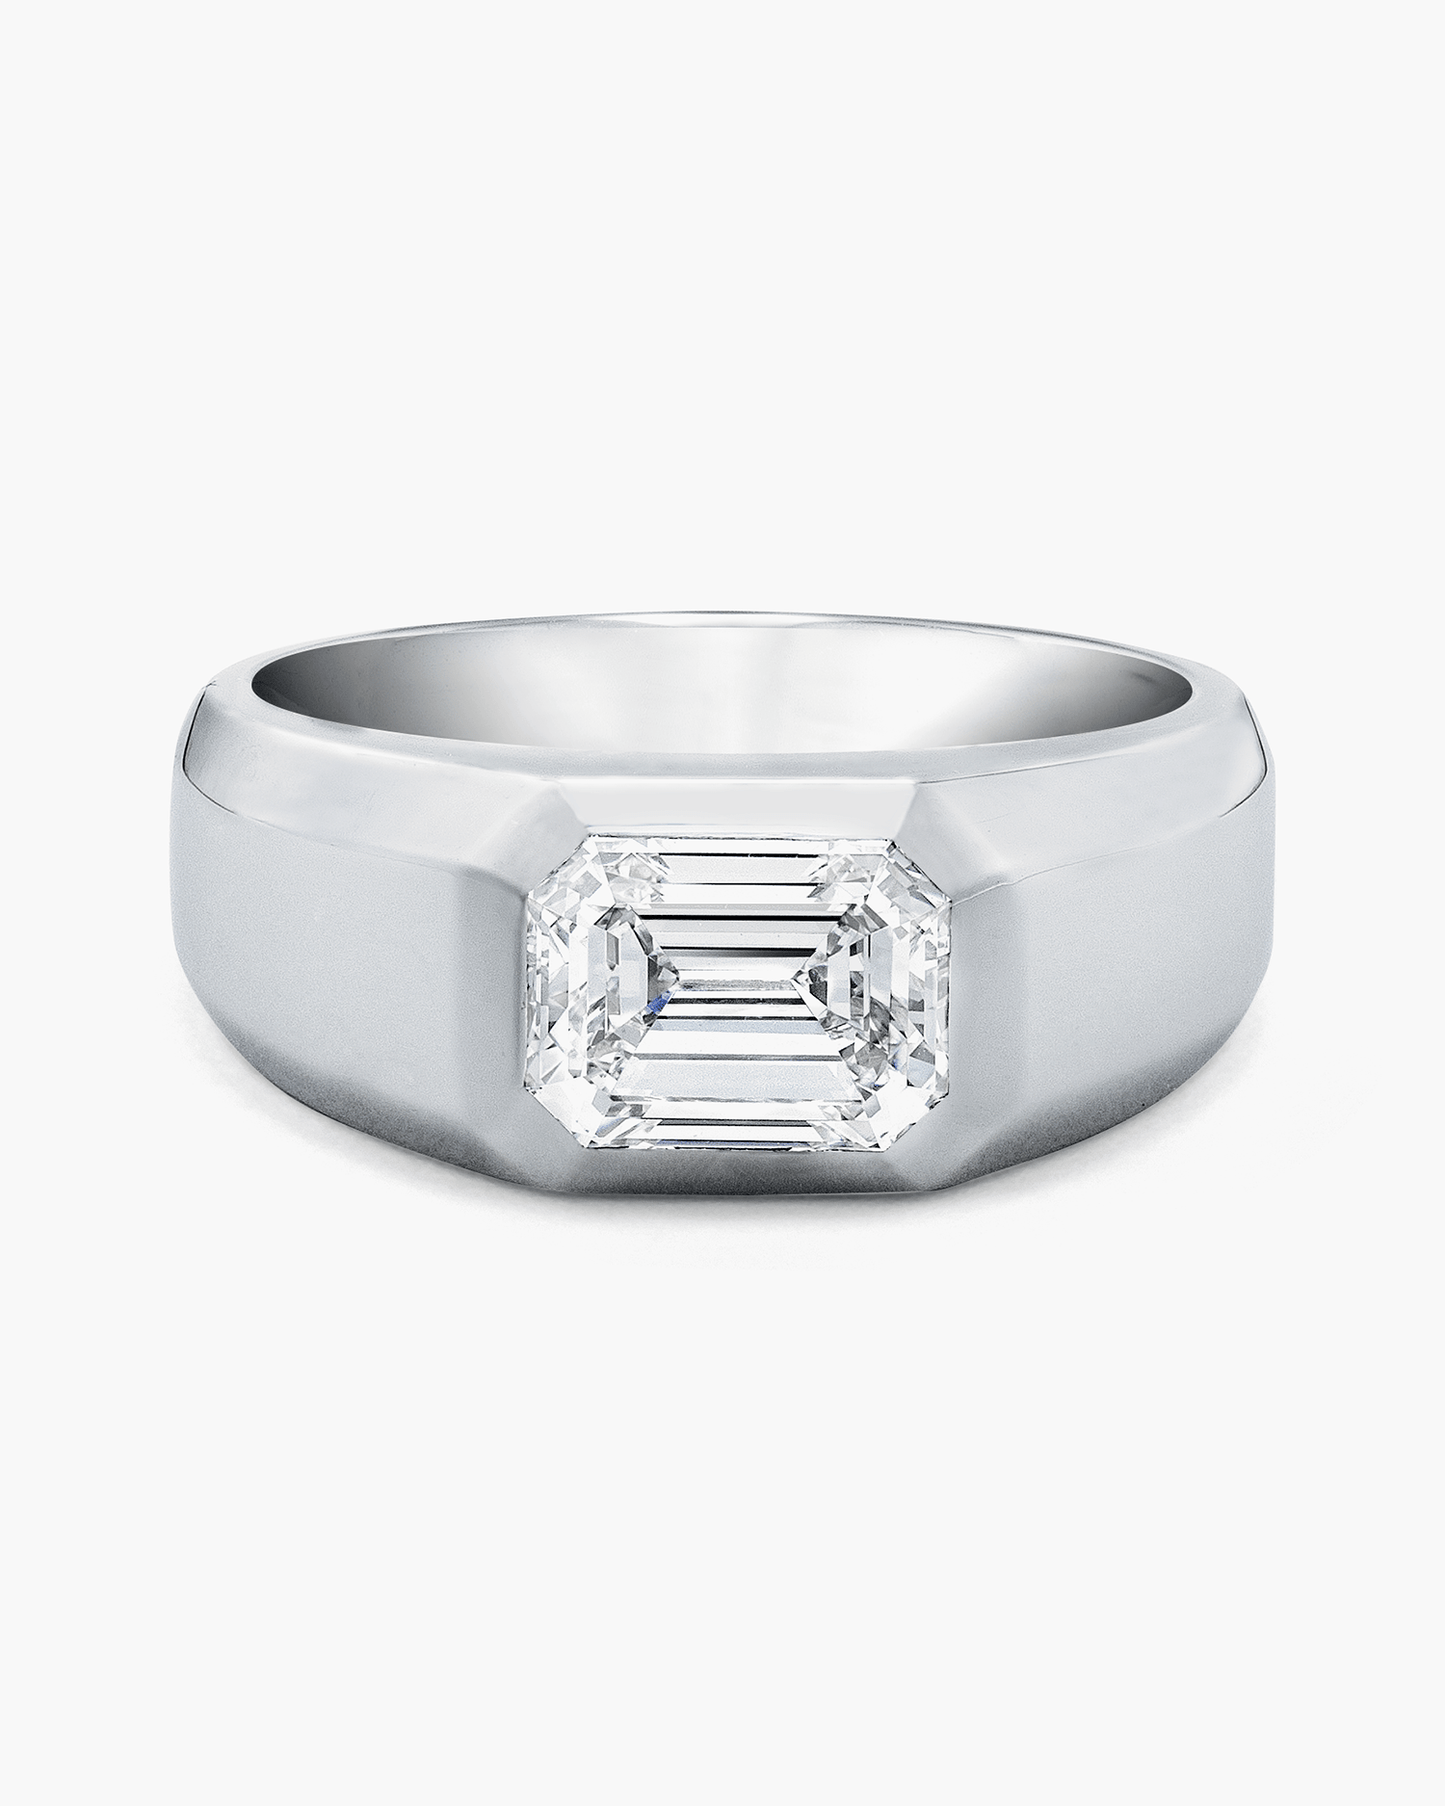 3.07 carat Emerald Cut Diamond Gentlemen's Ring